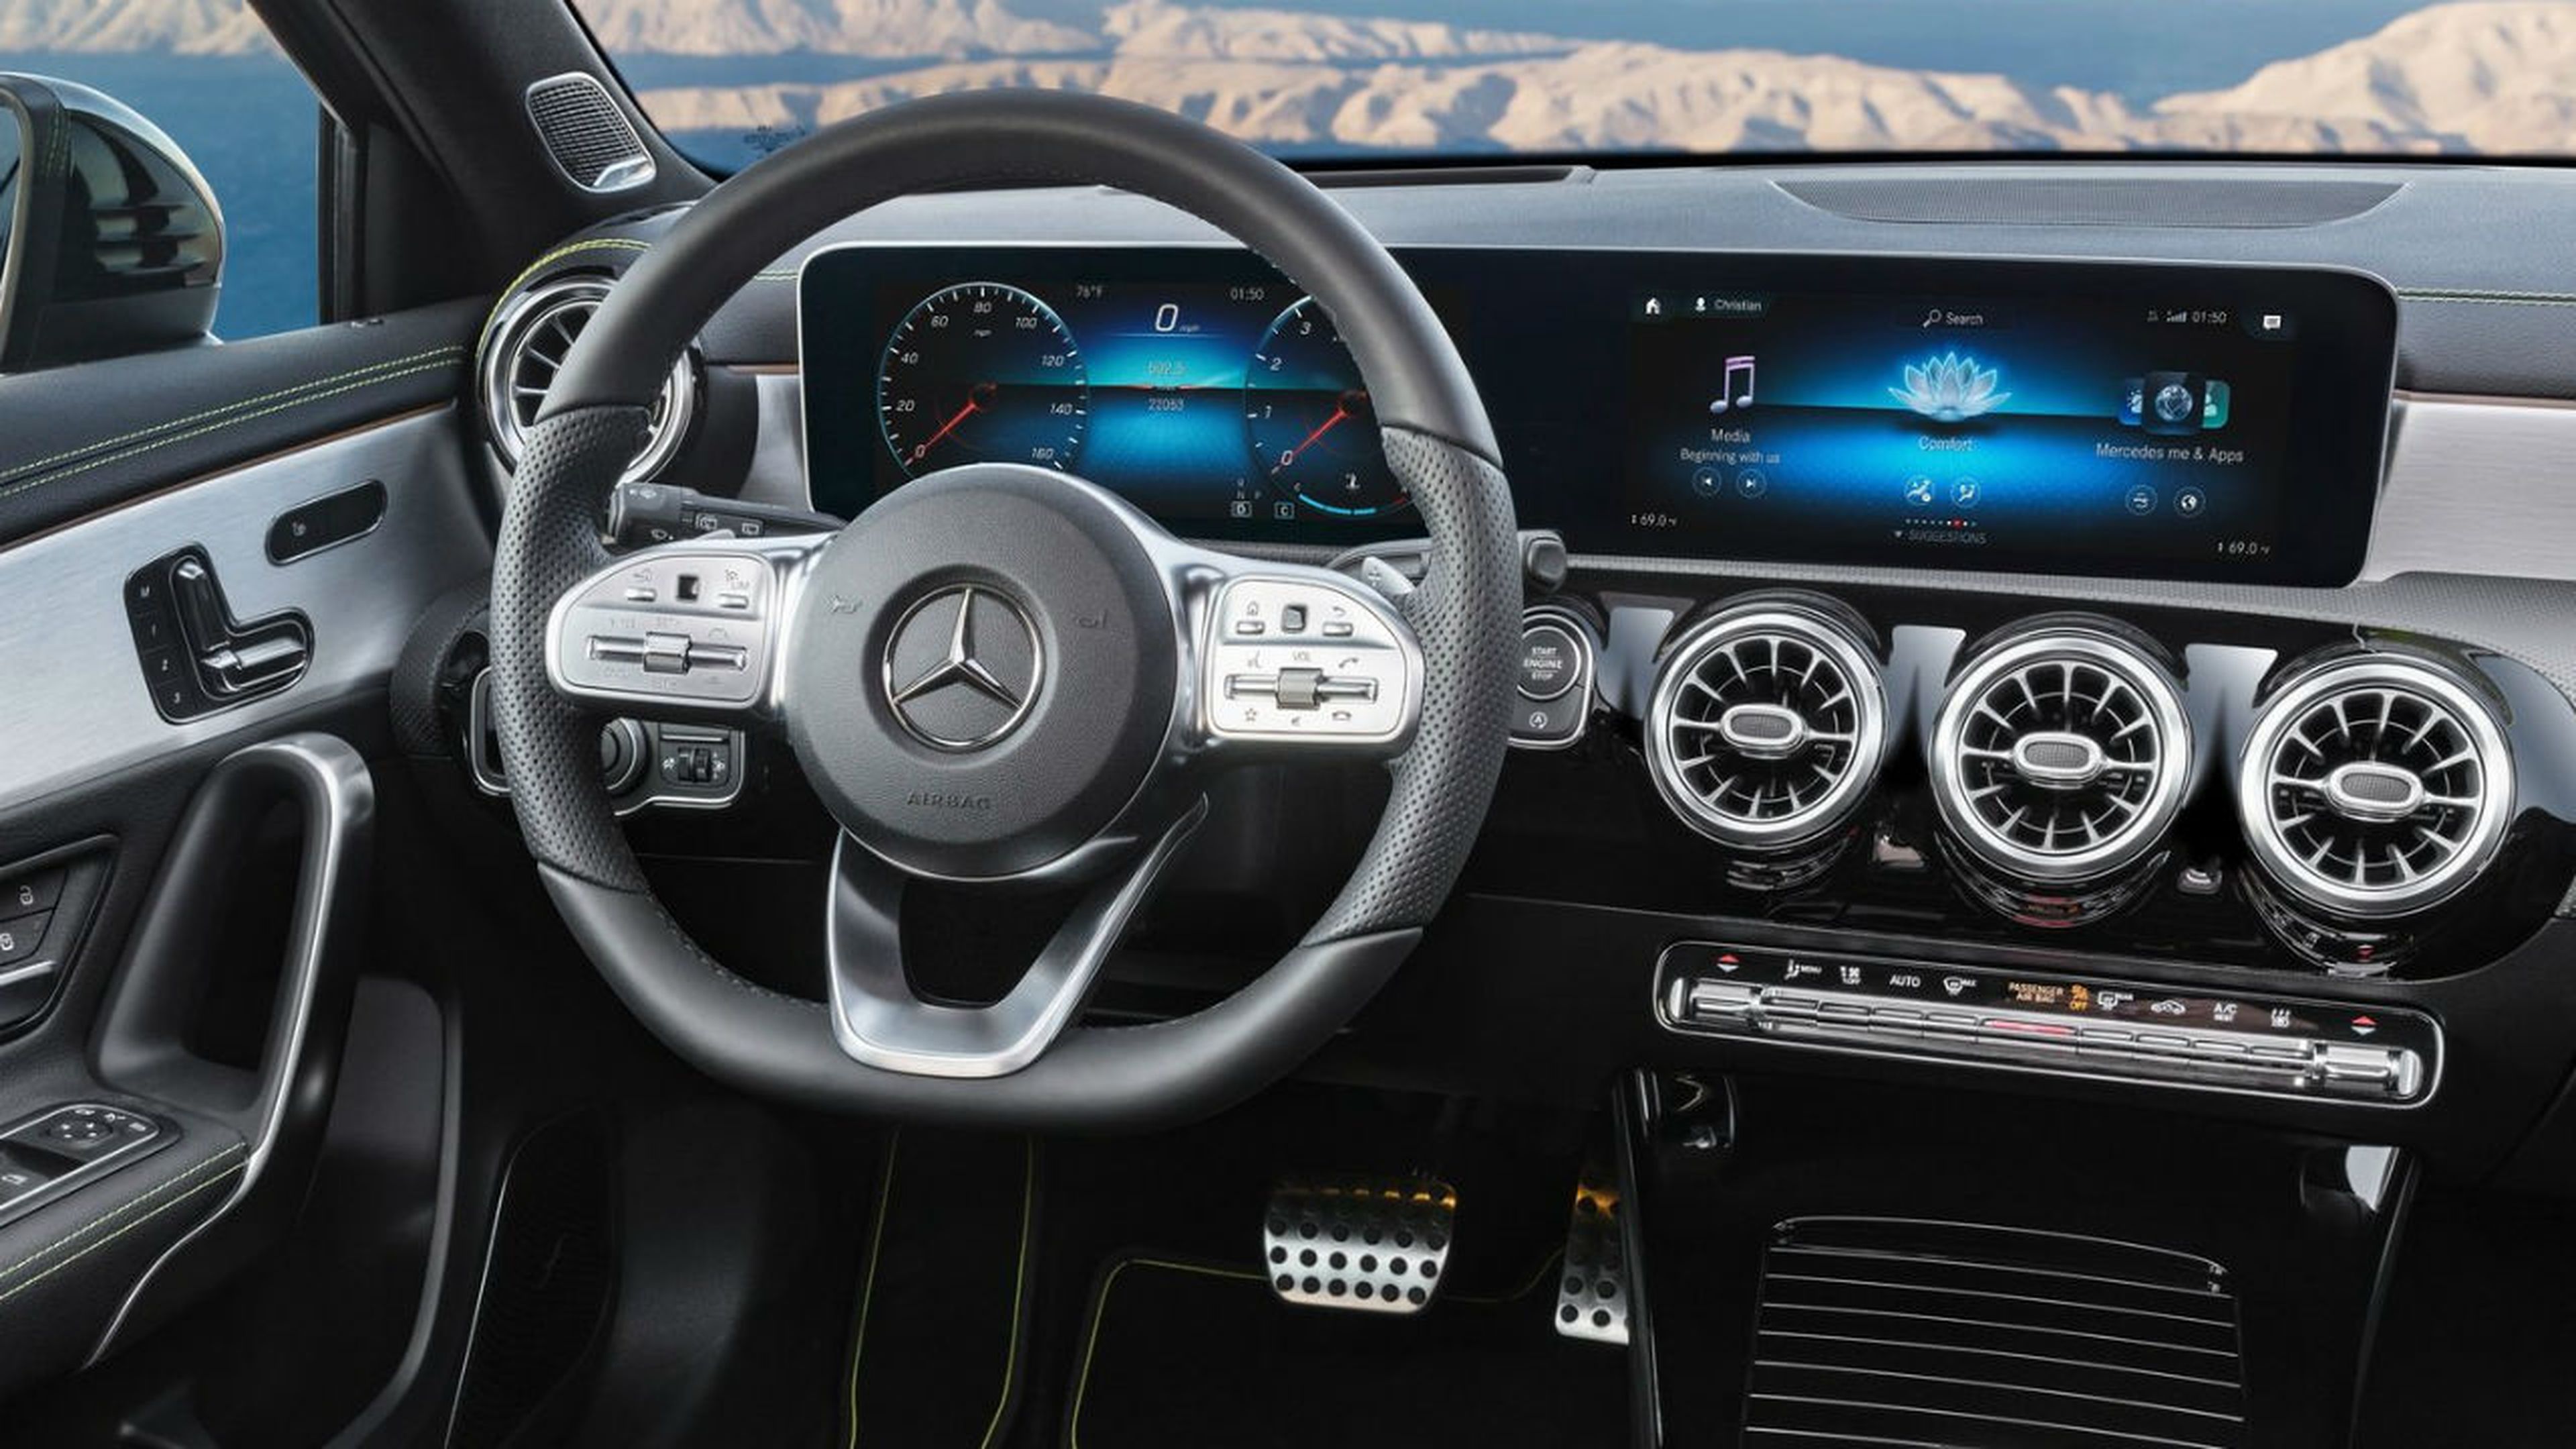 Así es el interior del Mercedes Clase A 2020.